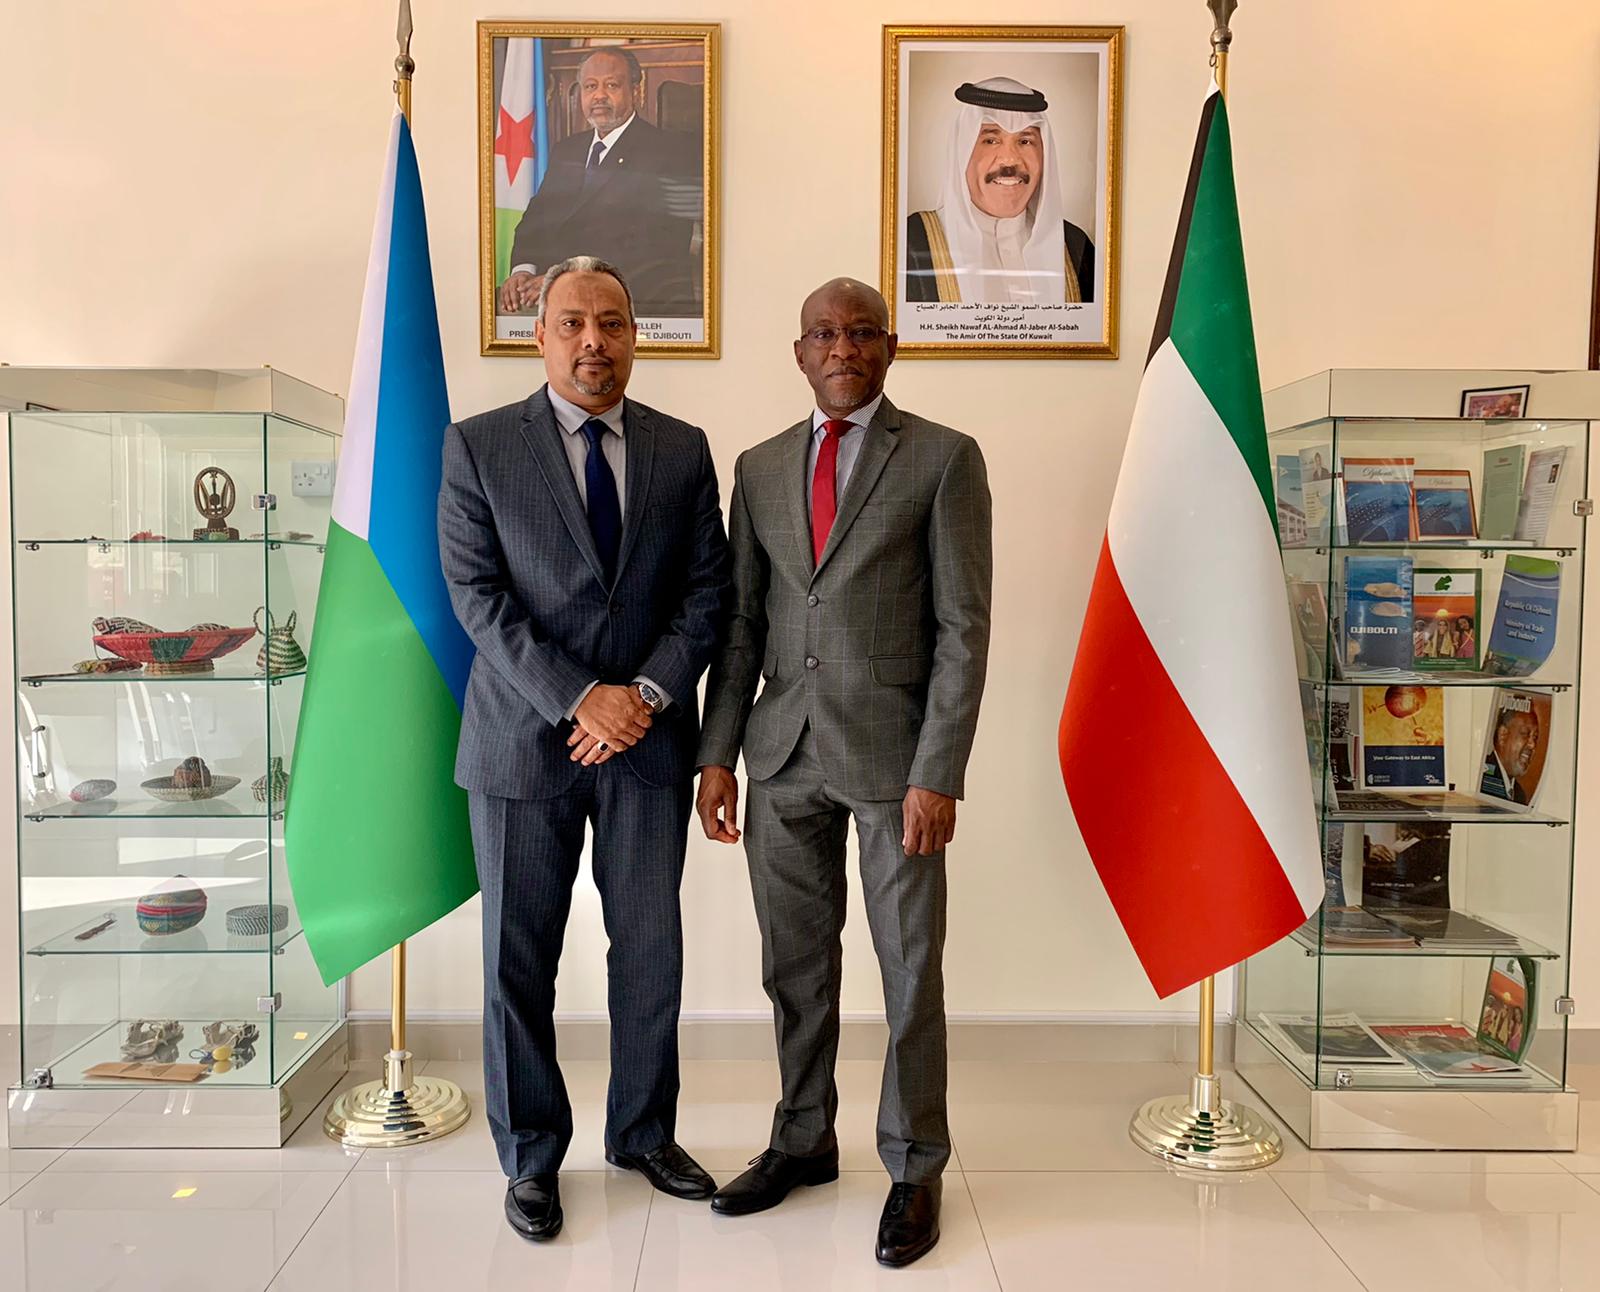 Visit of the Ambassador of Burkina Faso to the Embassy